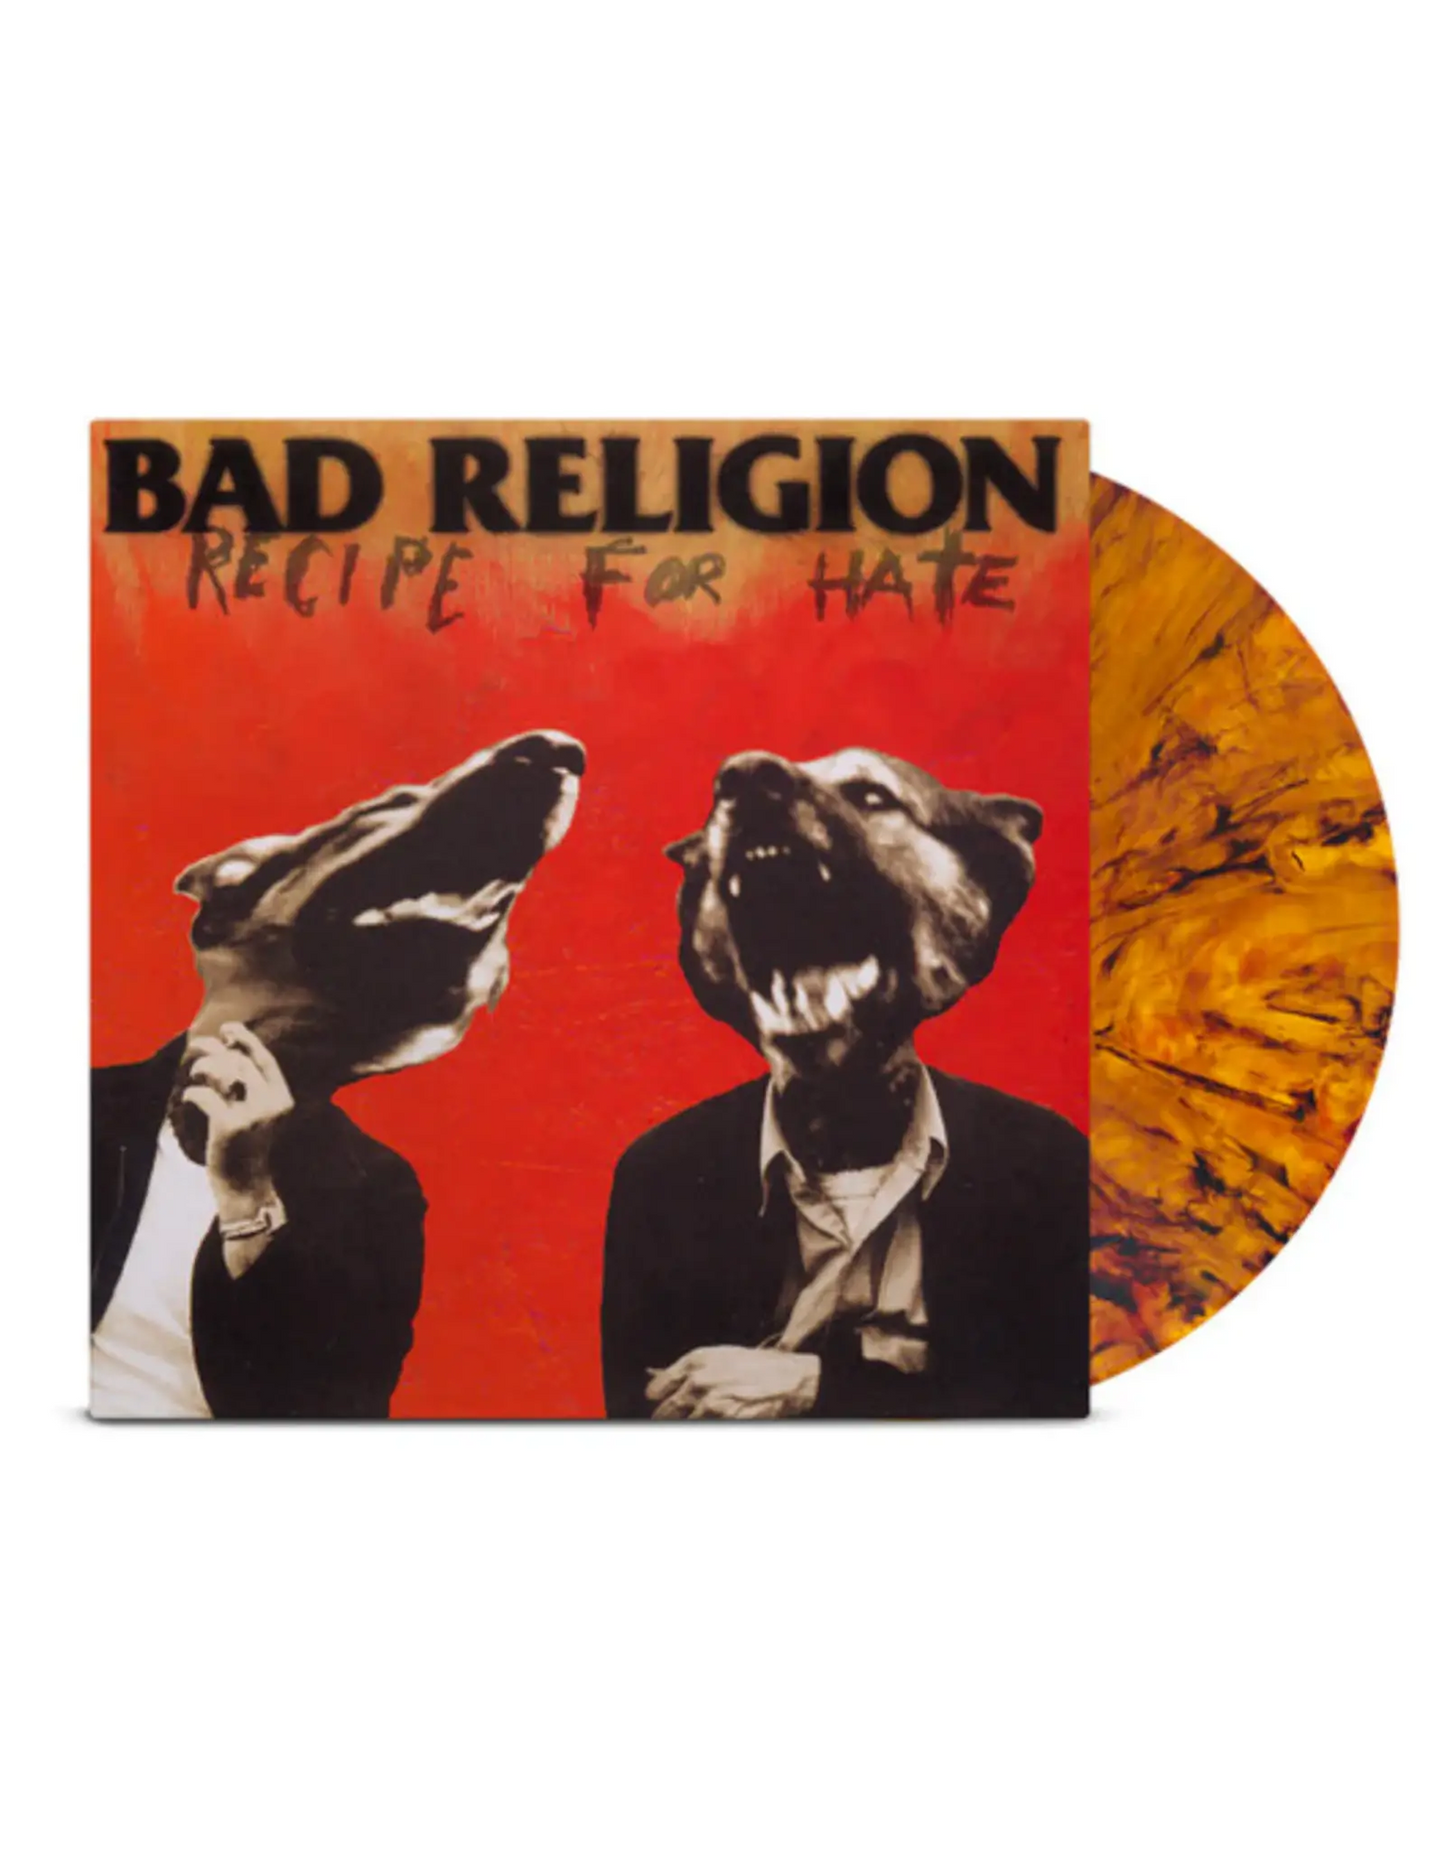 LP - Bad Religion - Recipe For Hate